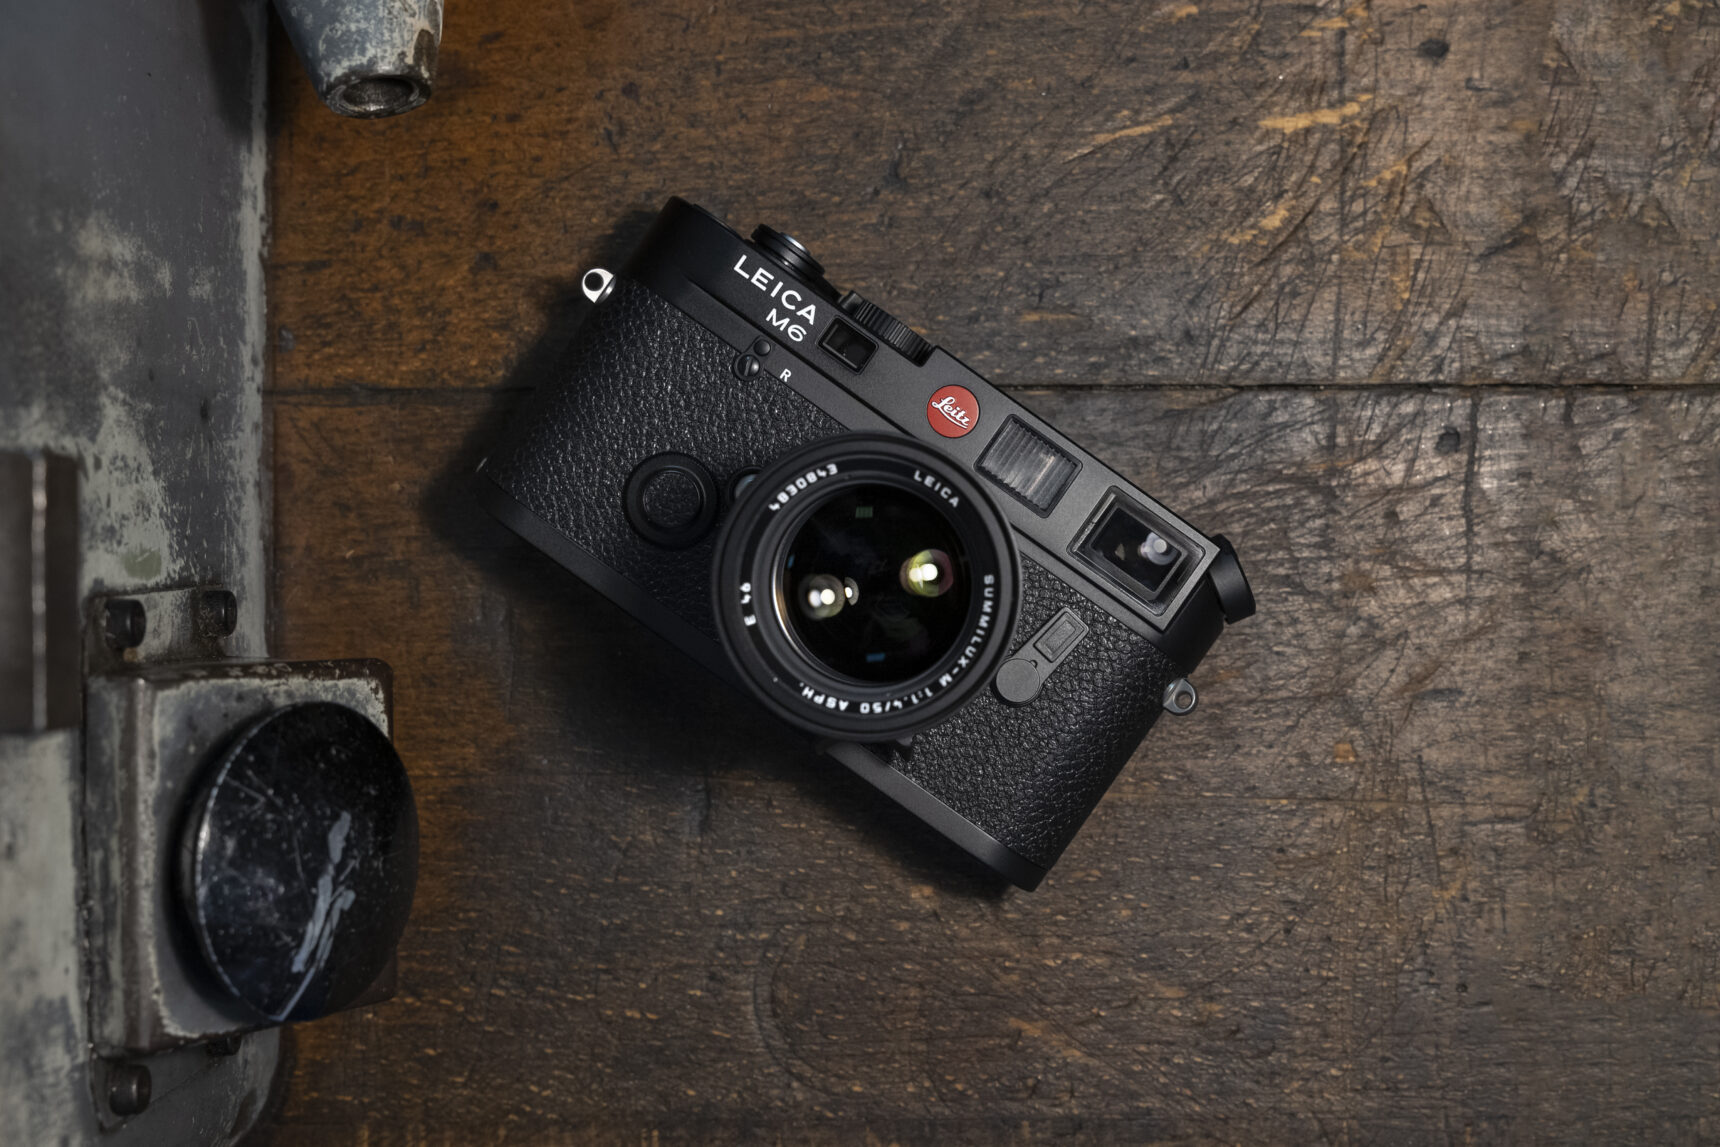 New Leica M6 Red Dot Says Leitz